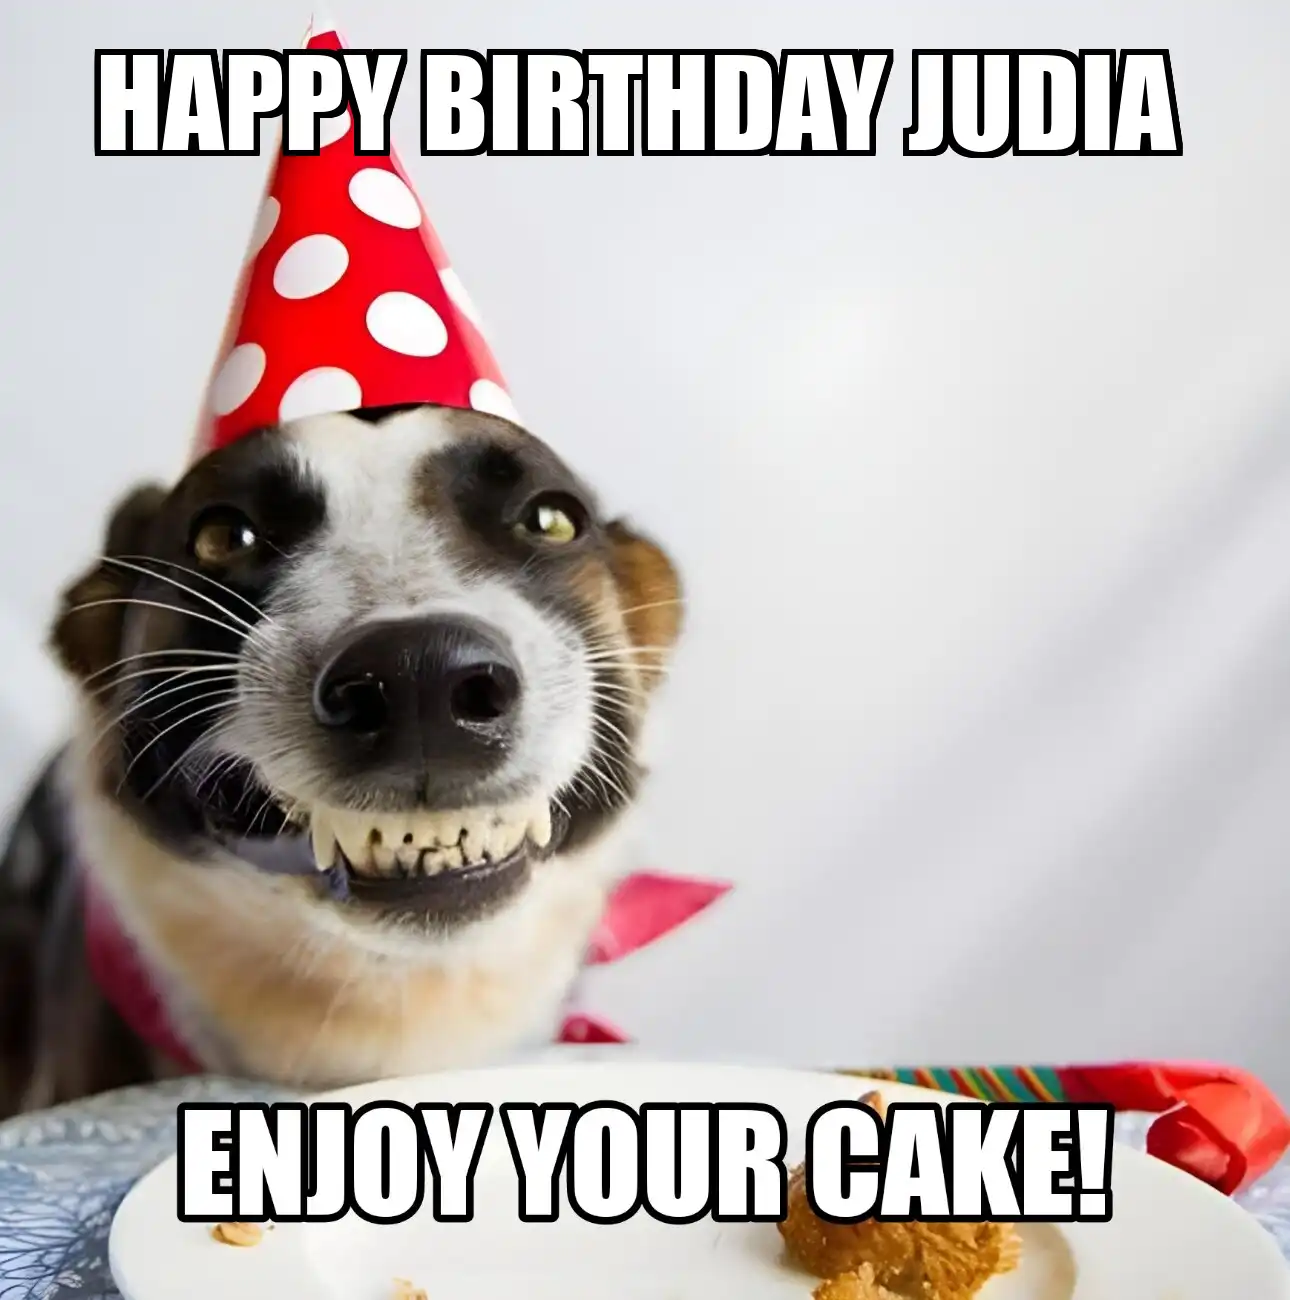 Happy Birthday Judia Enjoy Your Cake Dog Meme